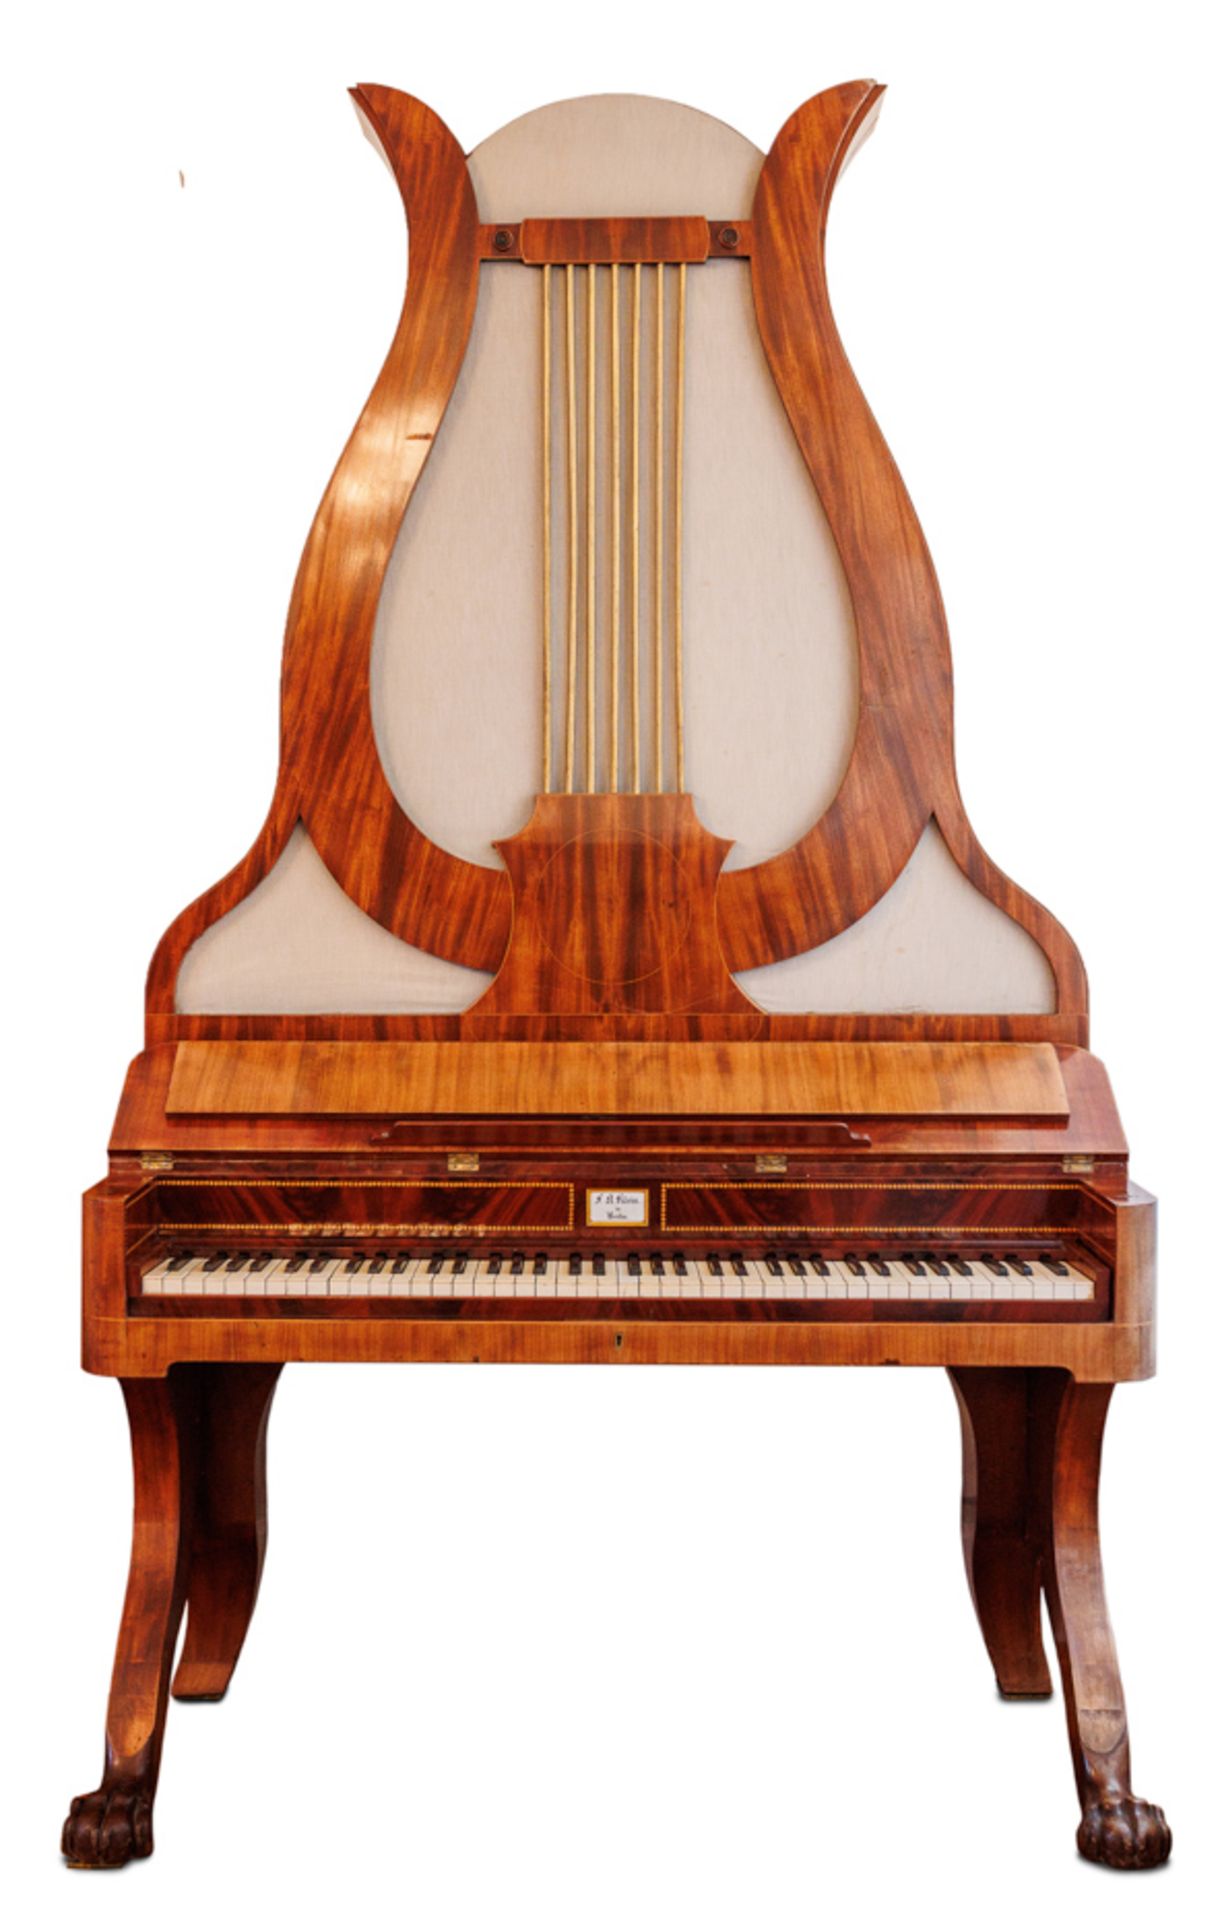 LYRE PIANO SIGNED F.A. KLEIN, BERLIN CIRCA 1830-1835